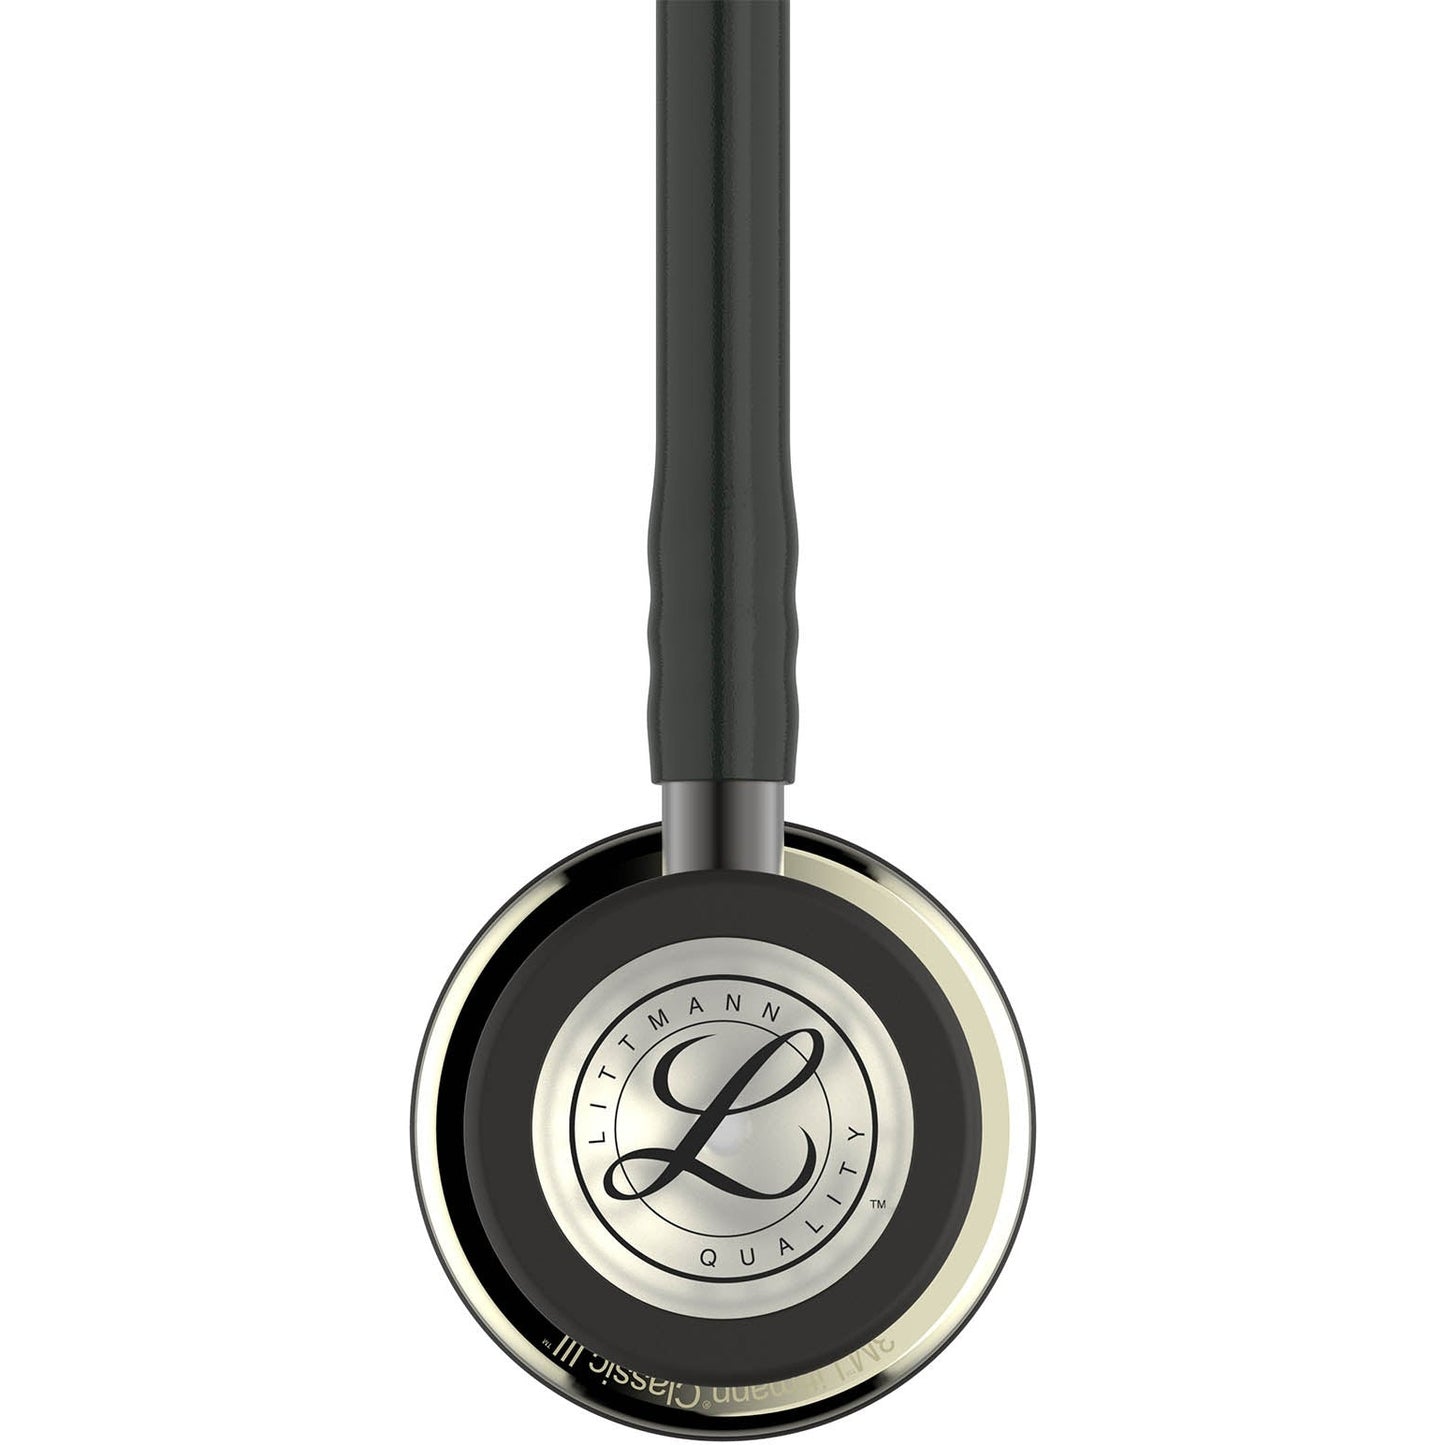 Littmann Classic III Monitoring Stethoscope: Champagne & Black 5861